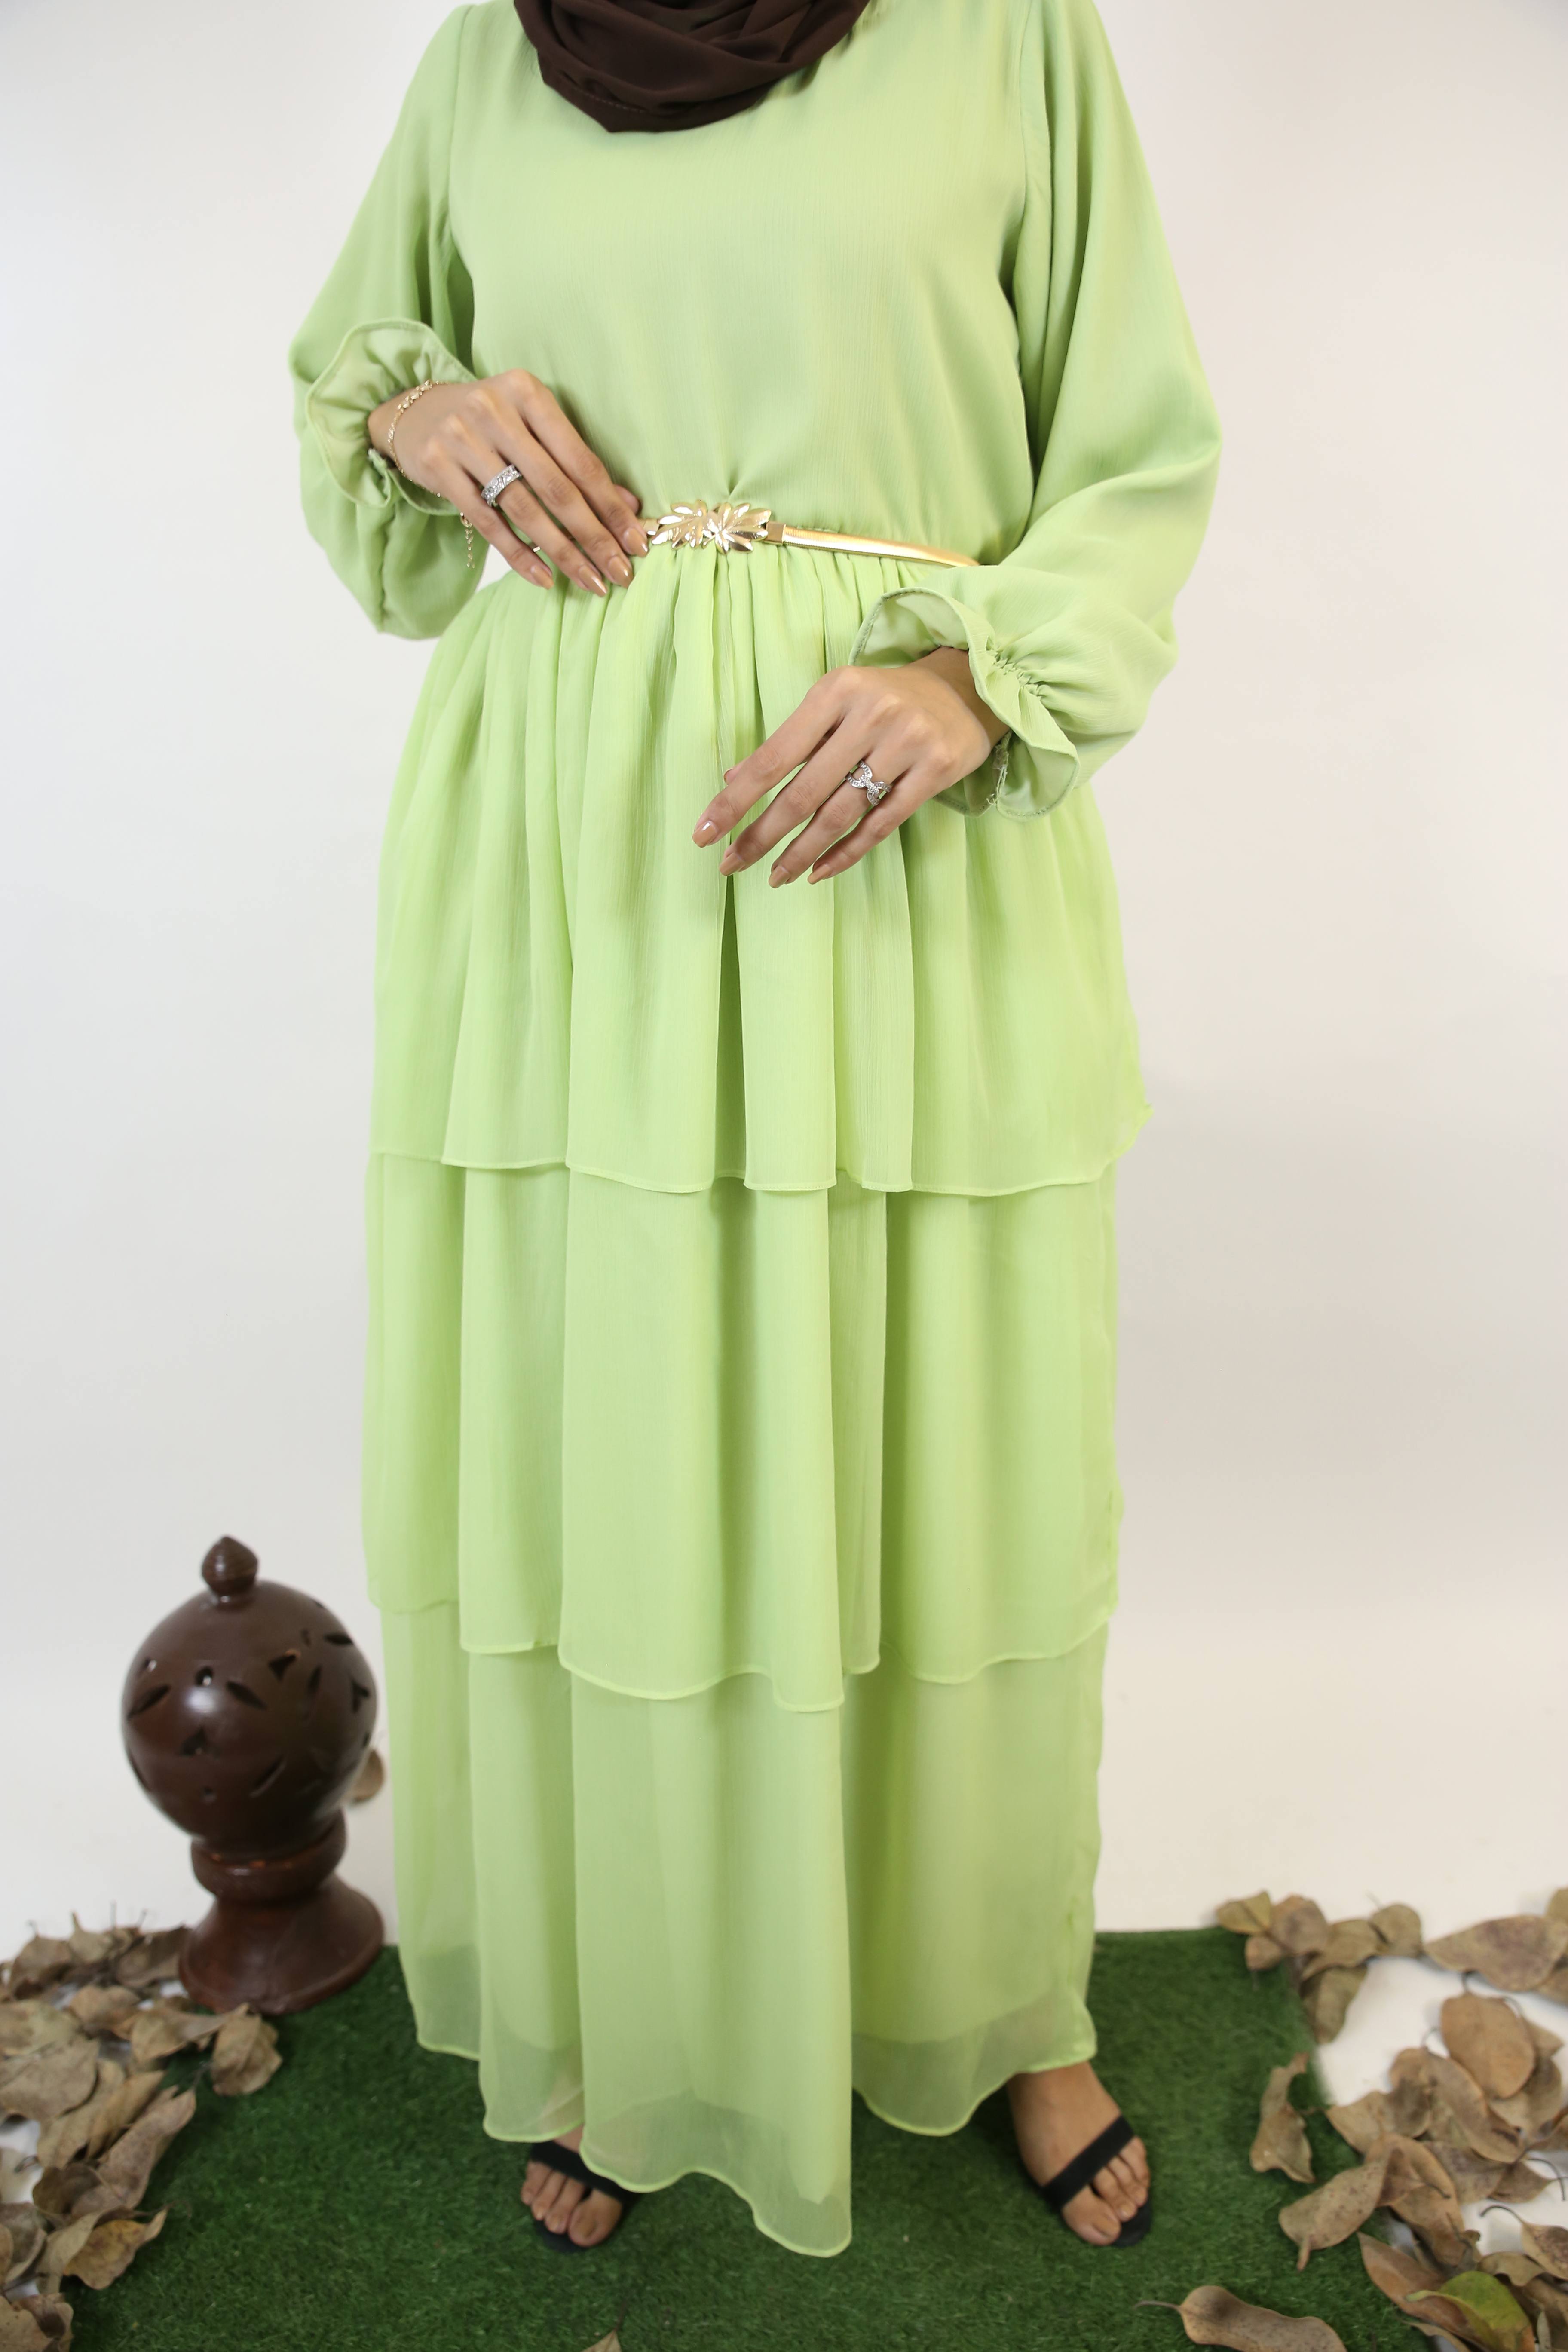 Musha- Classy Chiffon lined multi tiered maxi dress with belt embellishment-Lime Green